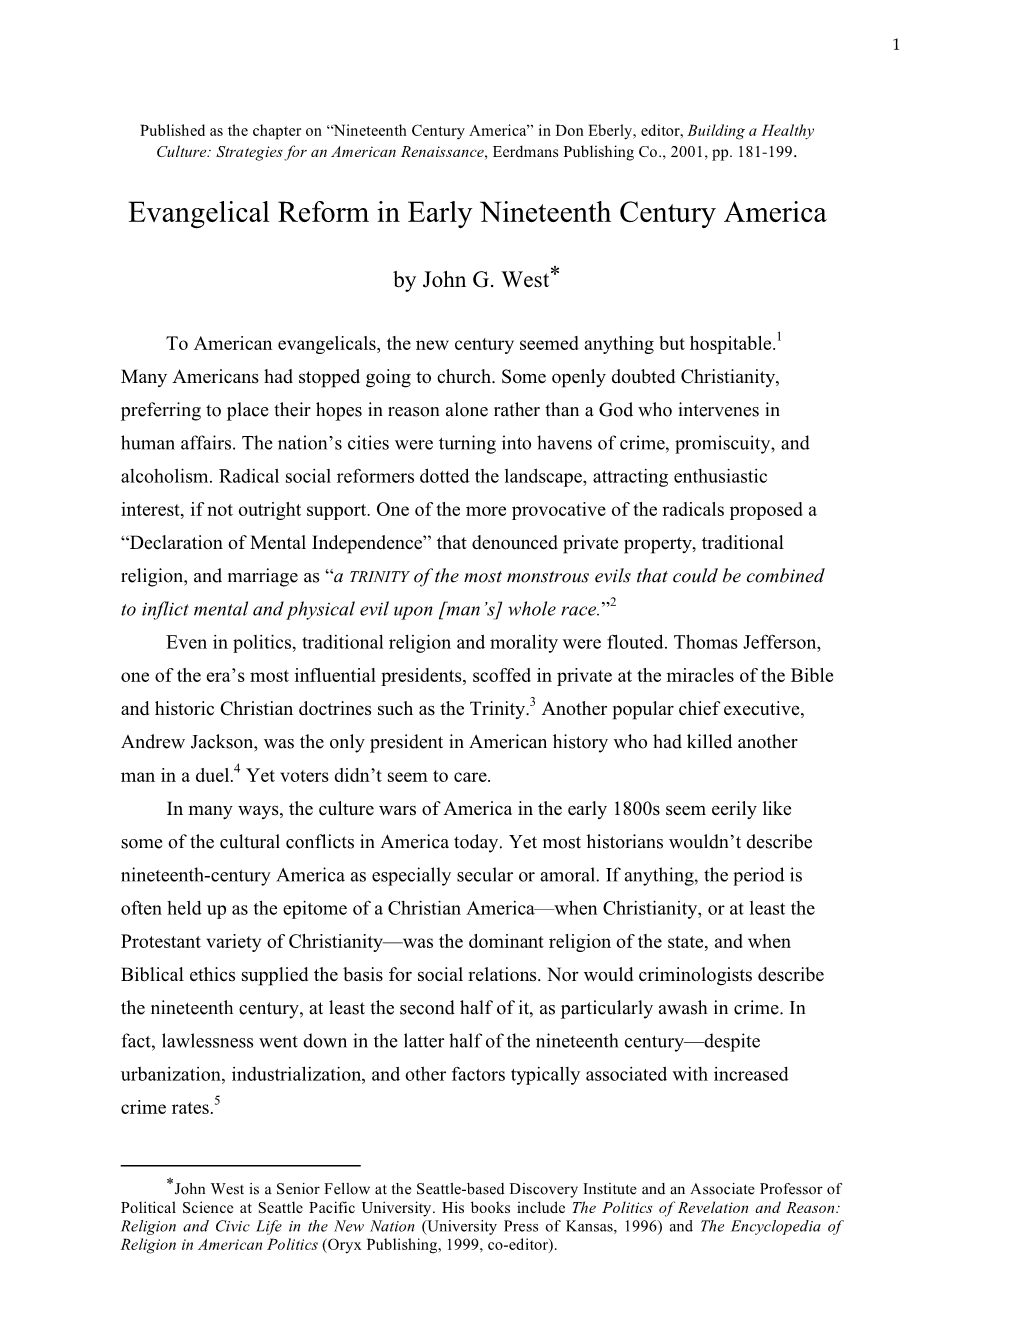 Evangelical Reform in Early Nineteenth Century America